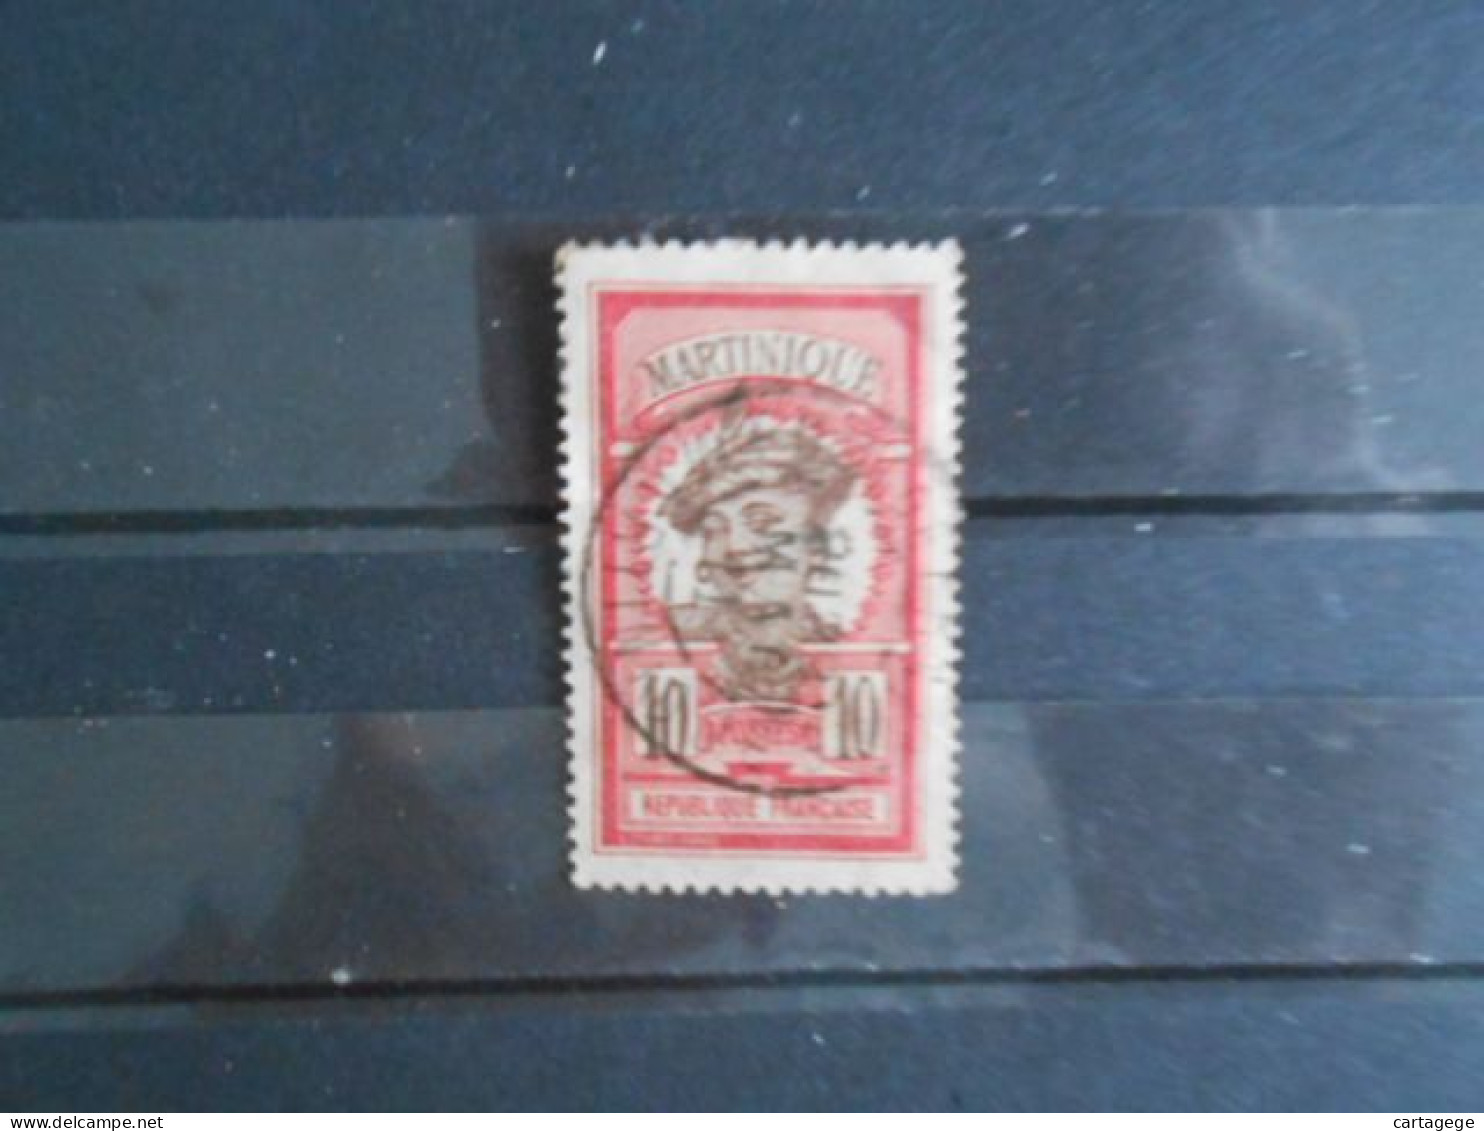 MARTINIQUE YT 65 MARTINIQUAISE 10c Rose - Used Stamps